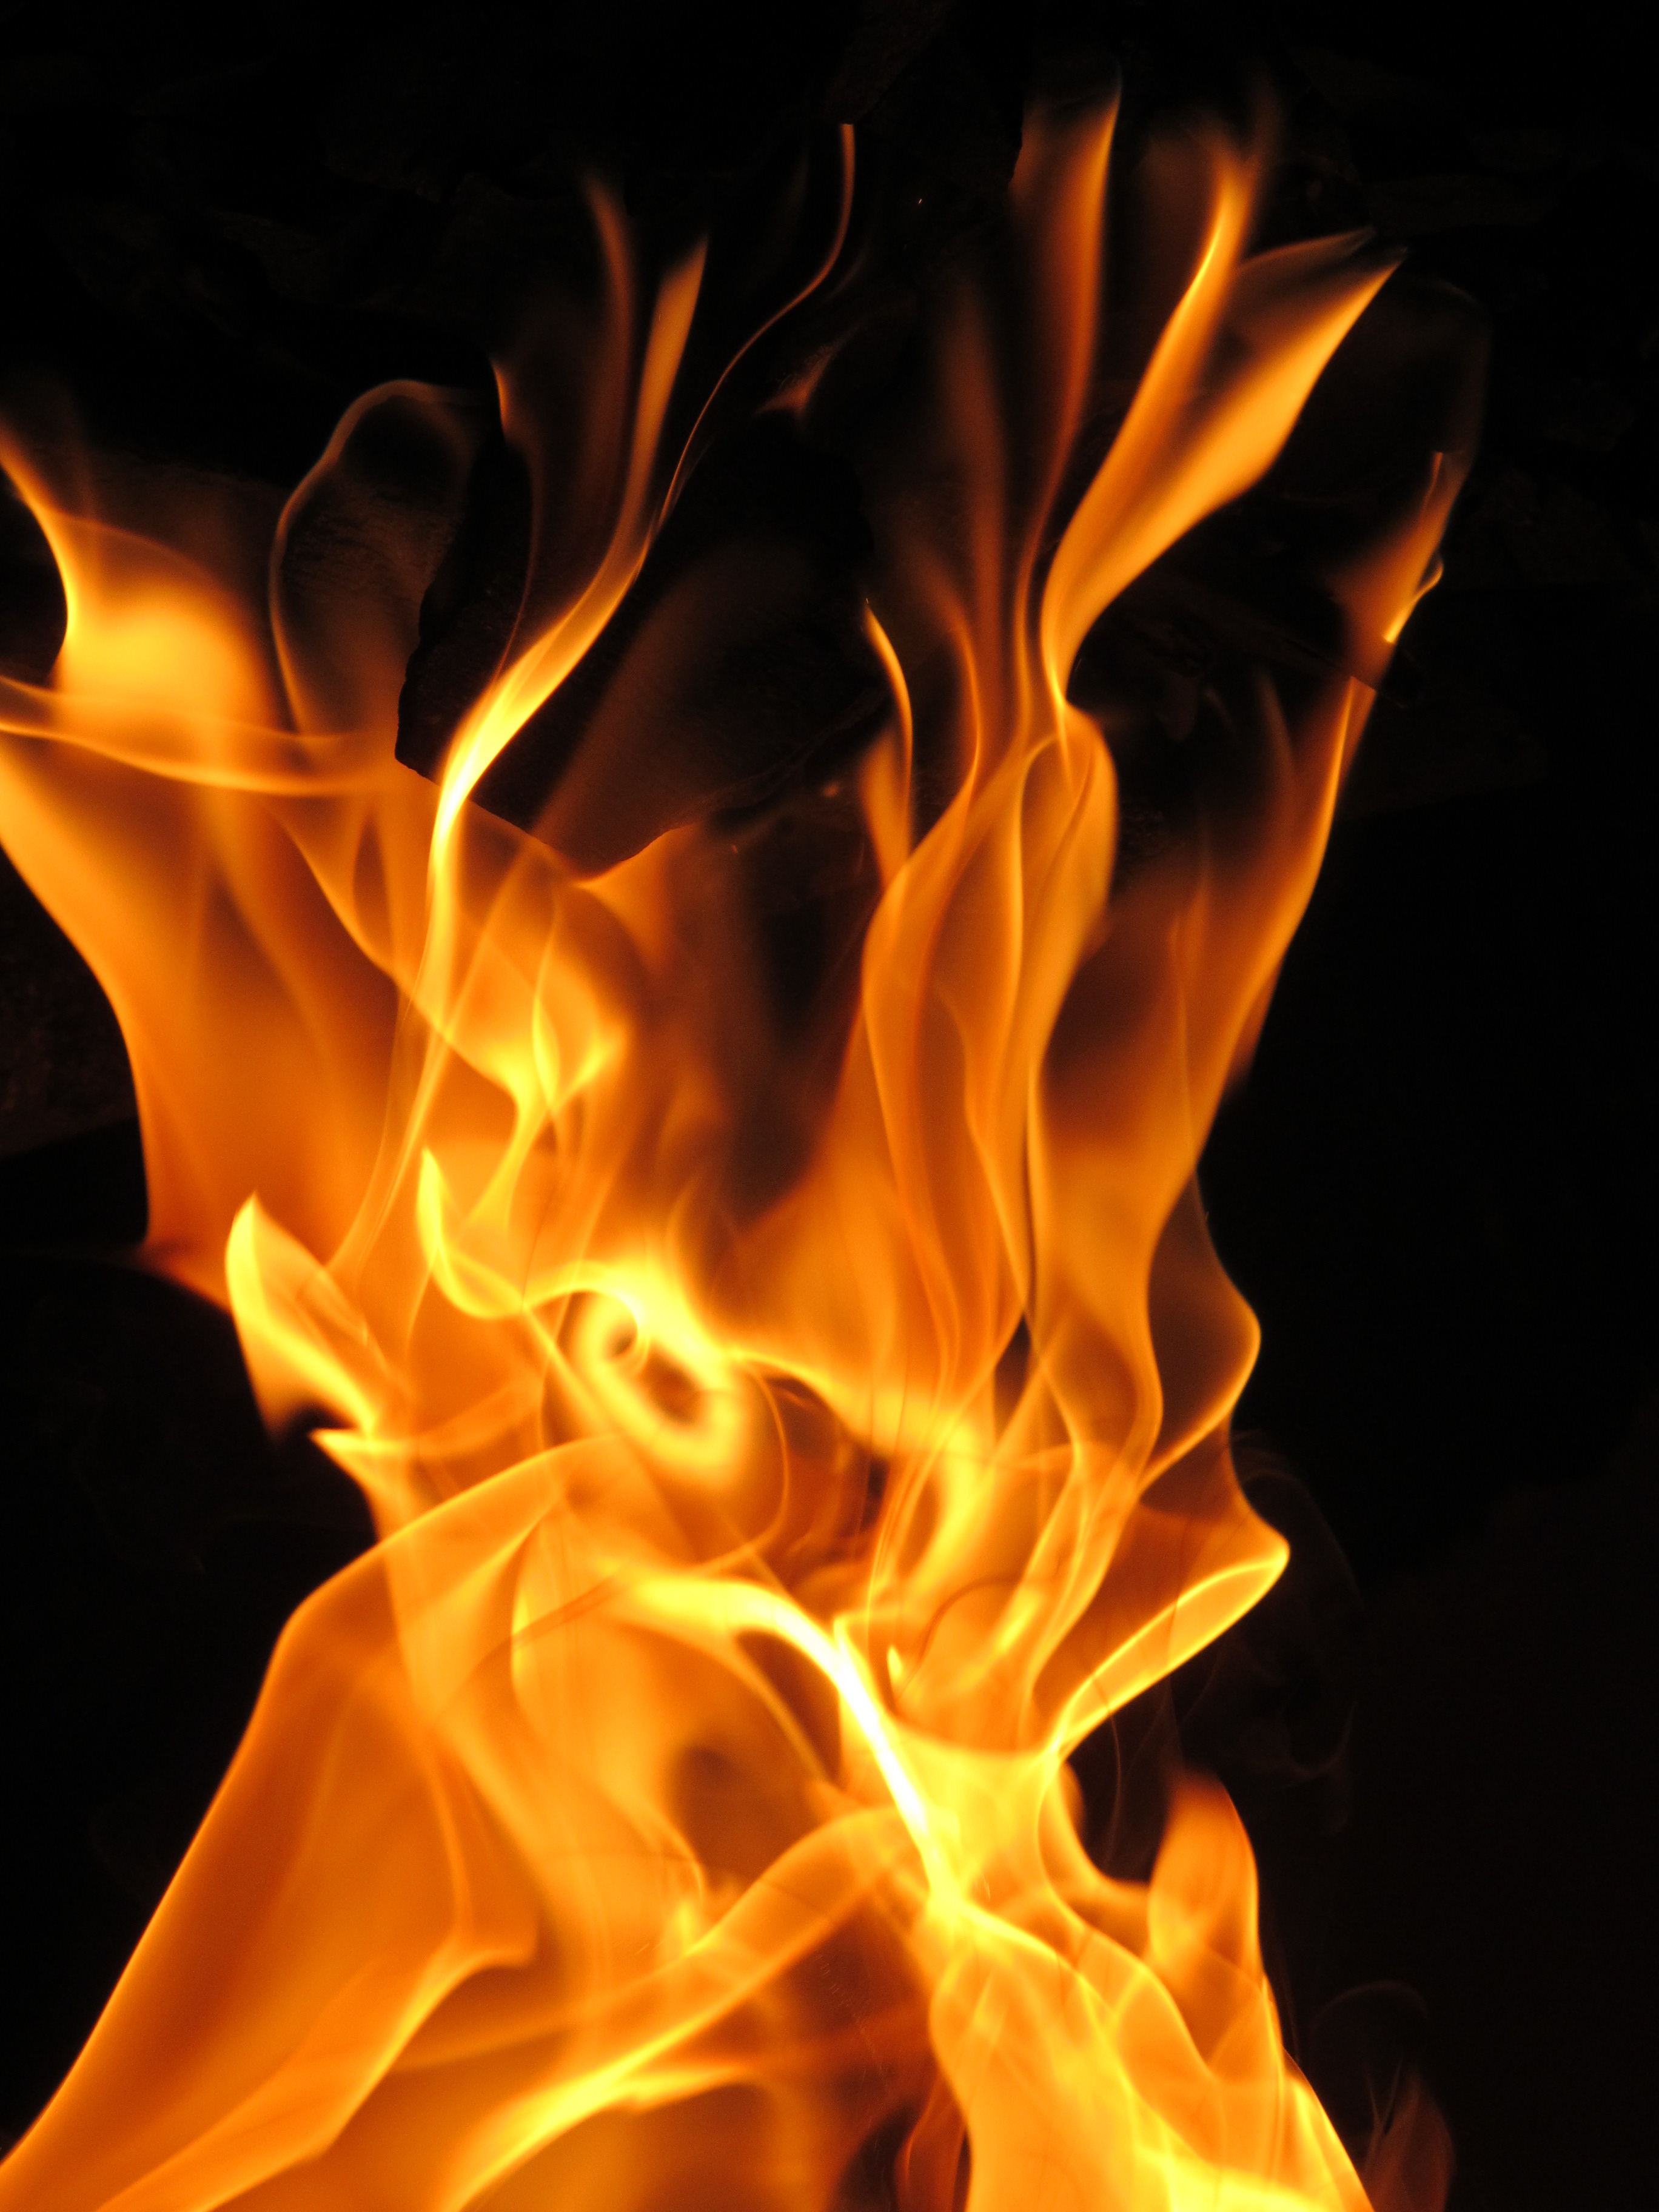 File:Fire in the dark.JPG - Wikimedia Commons